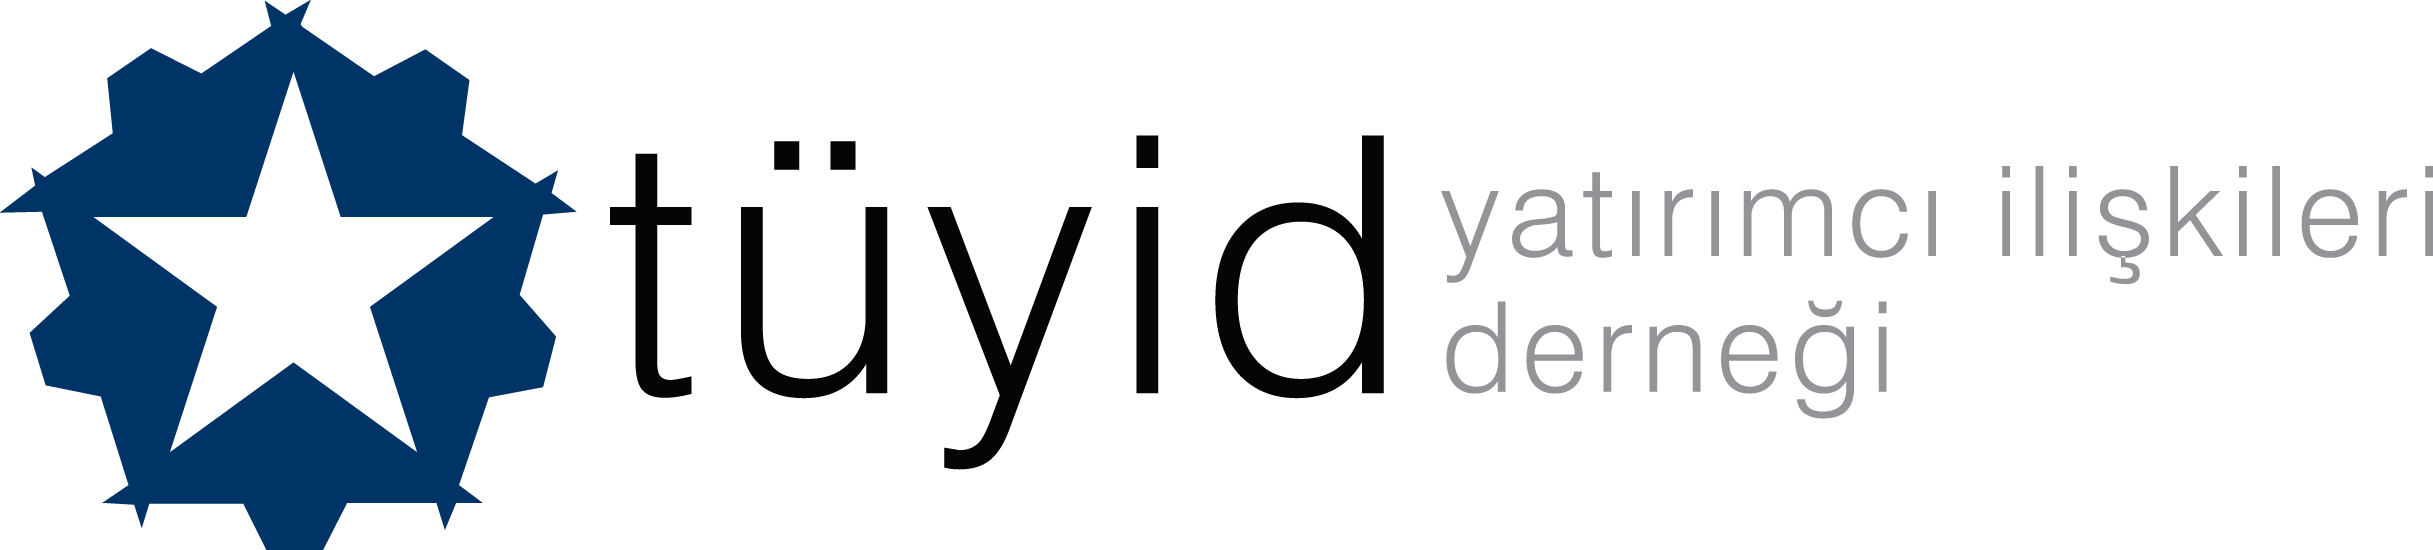 TÜYİD Logo